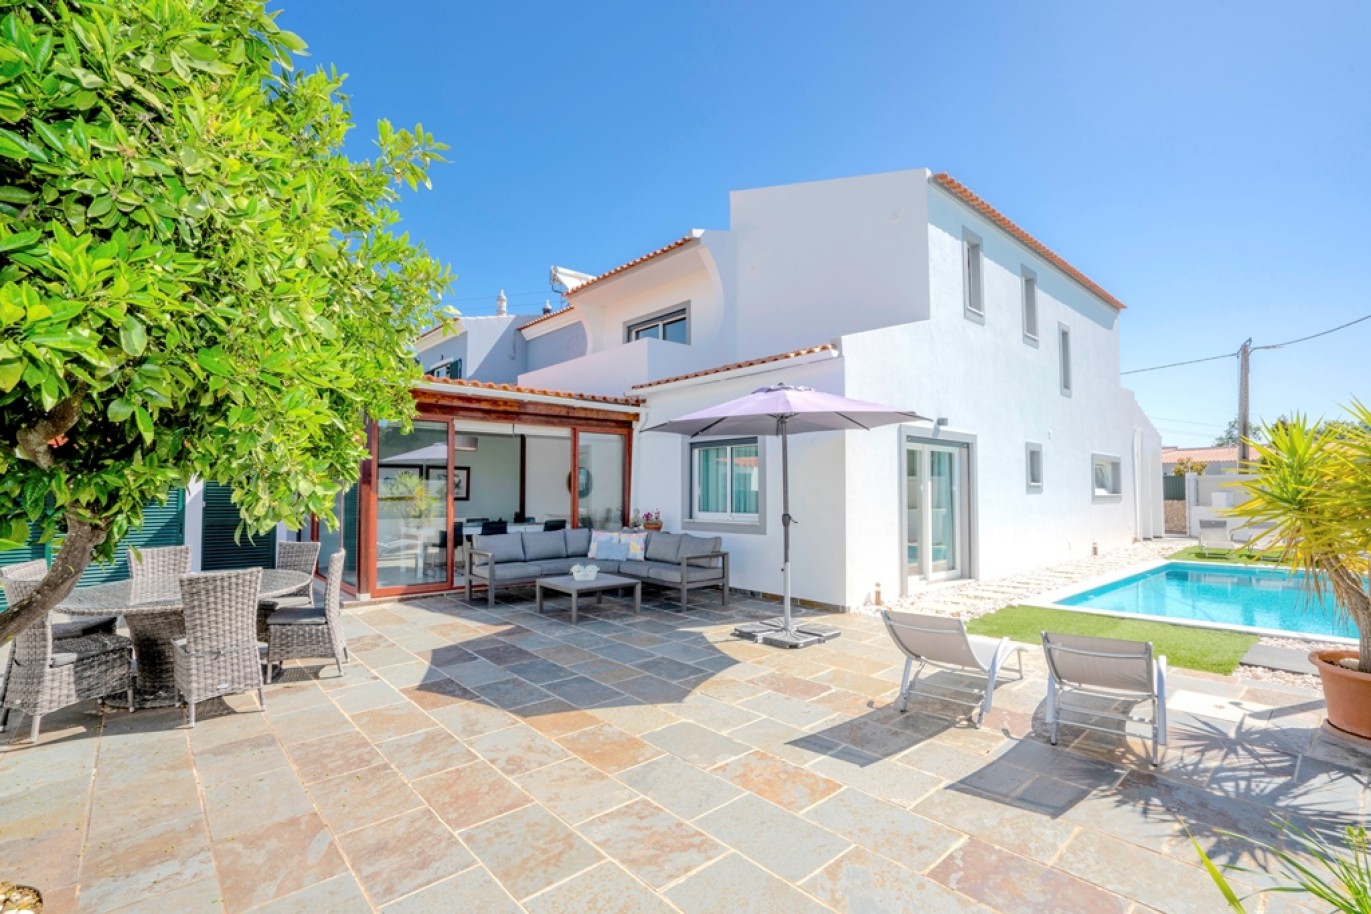 Moradia V4 renovada com piscina, para venda em Vilamoura, Algarve_268740